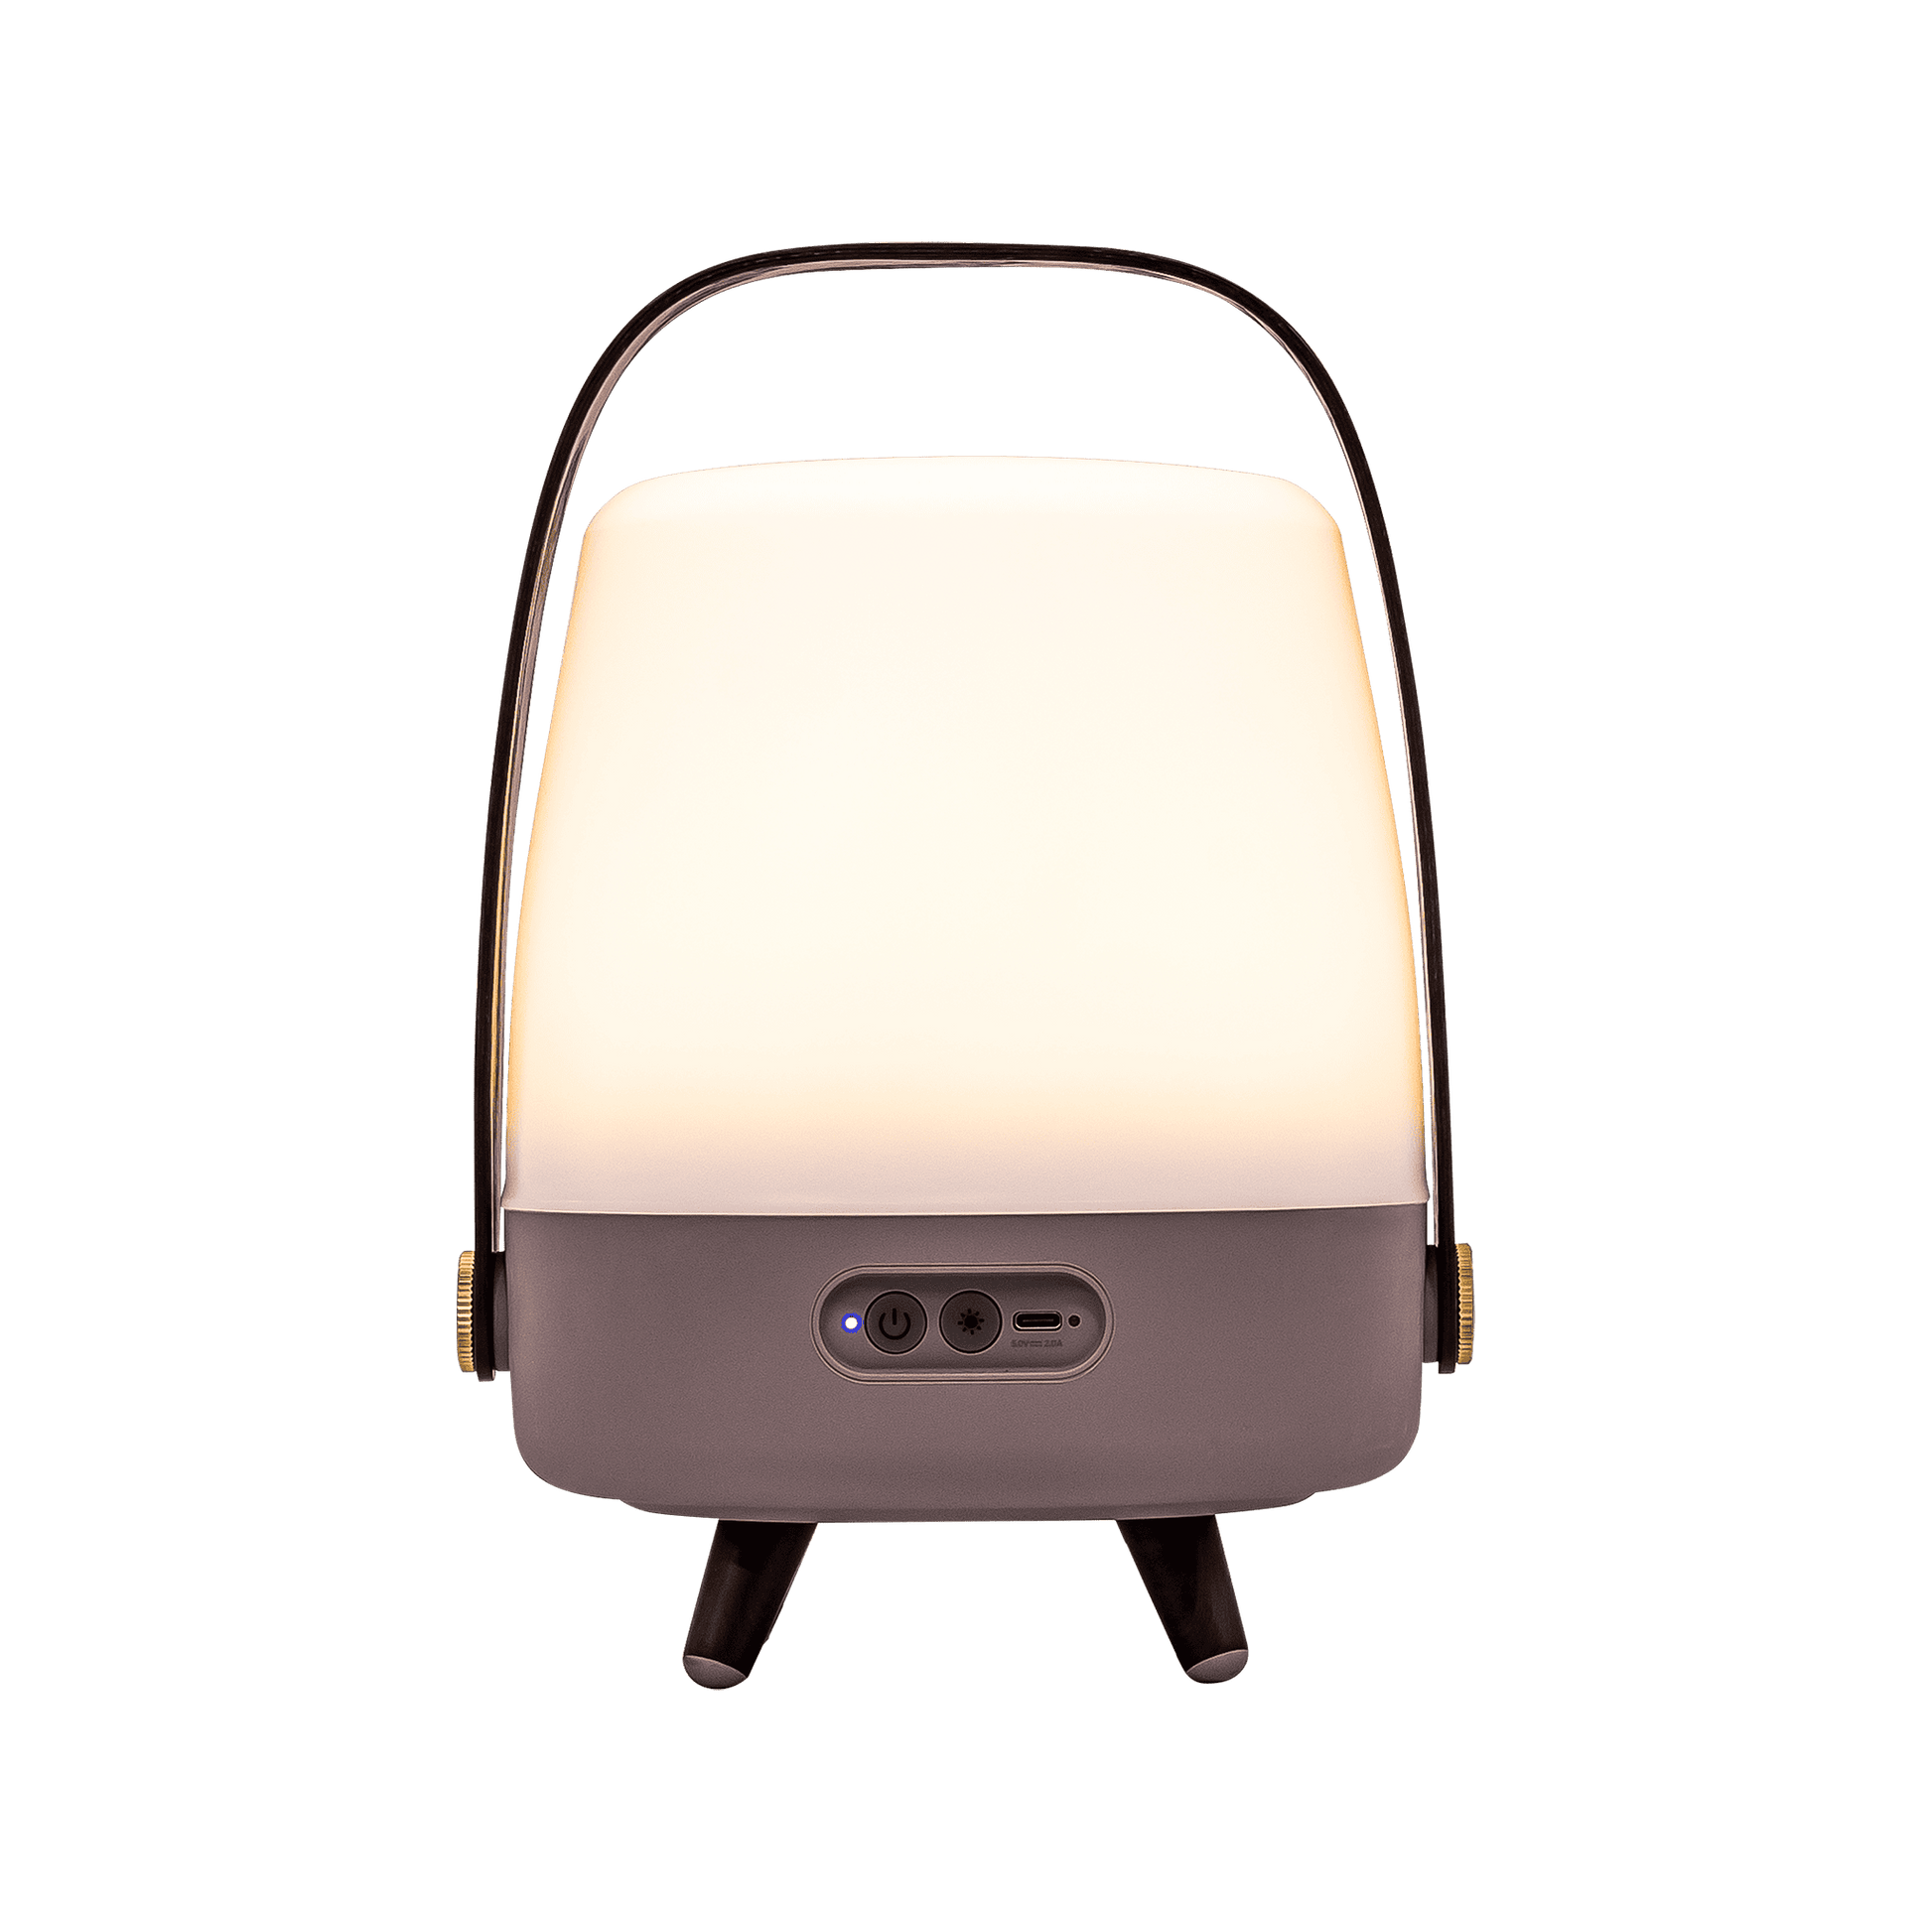 Kooduu Lite-up Play Mini Bluetooth Speaker & Portable LED Lamp in Earth Color